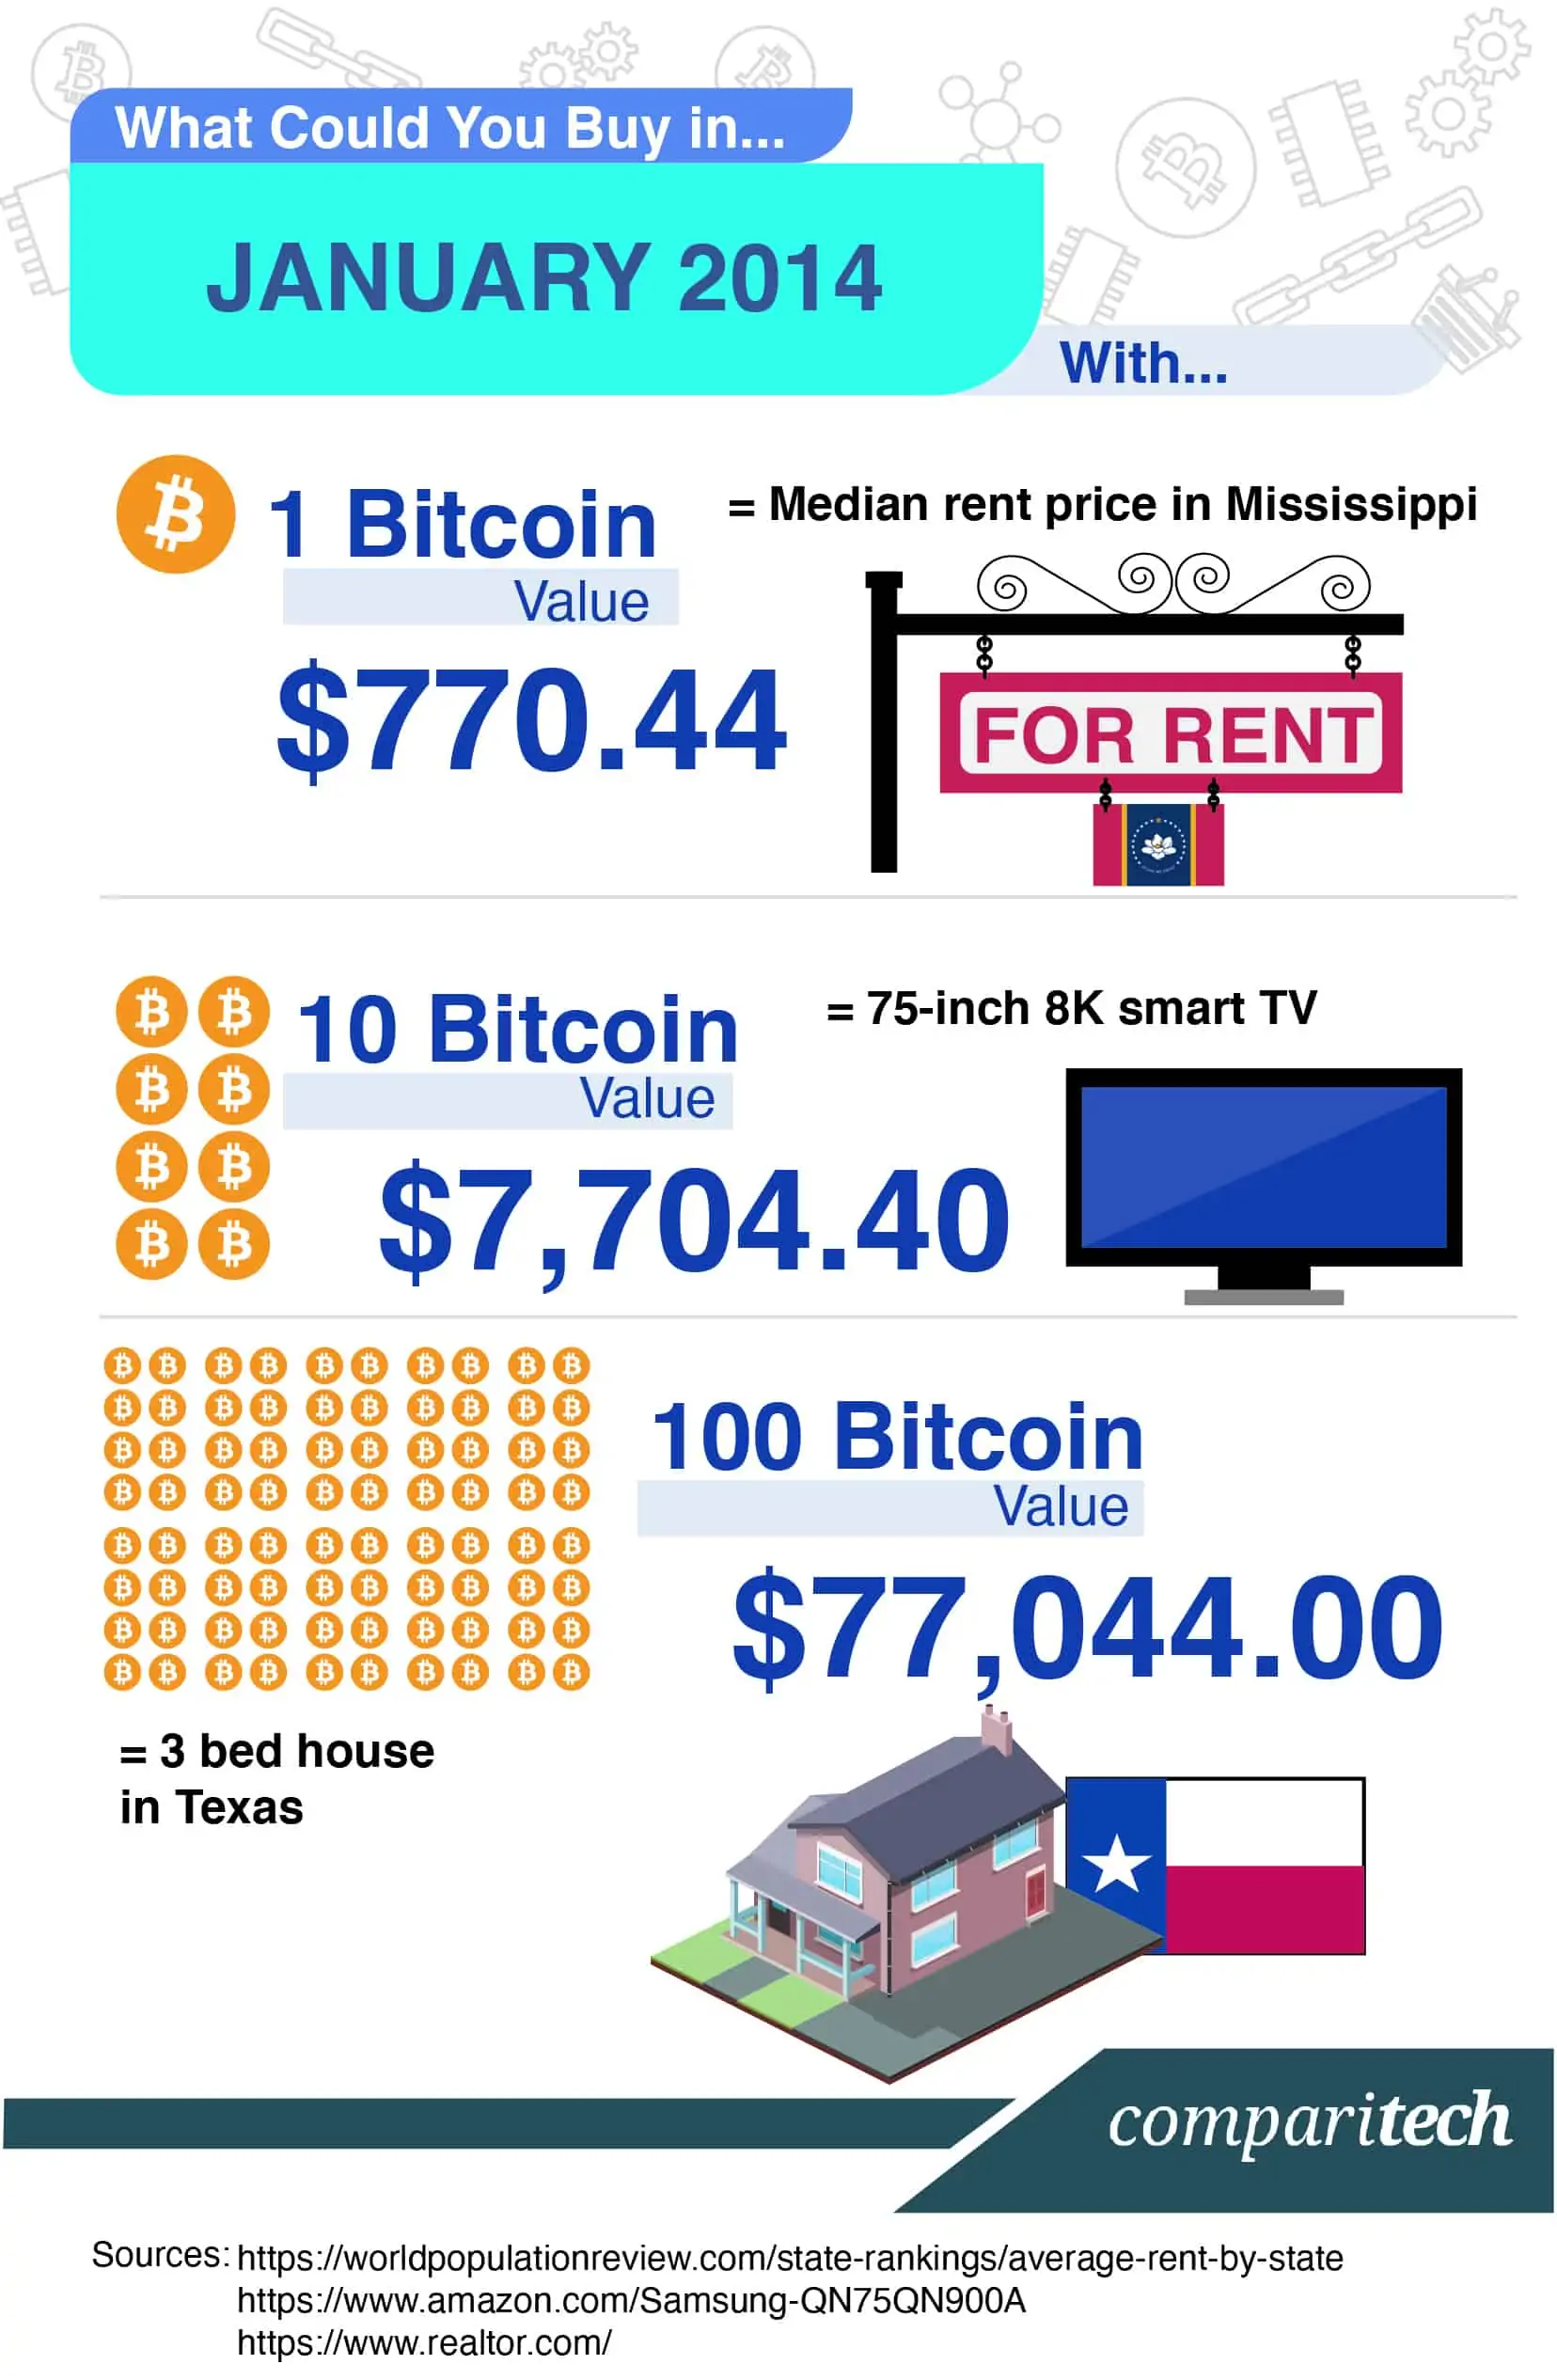 Bitcoin Price | StatMuse Money